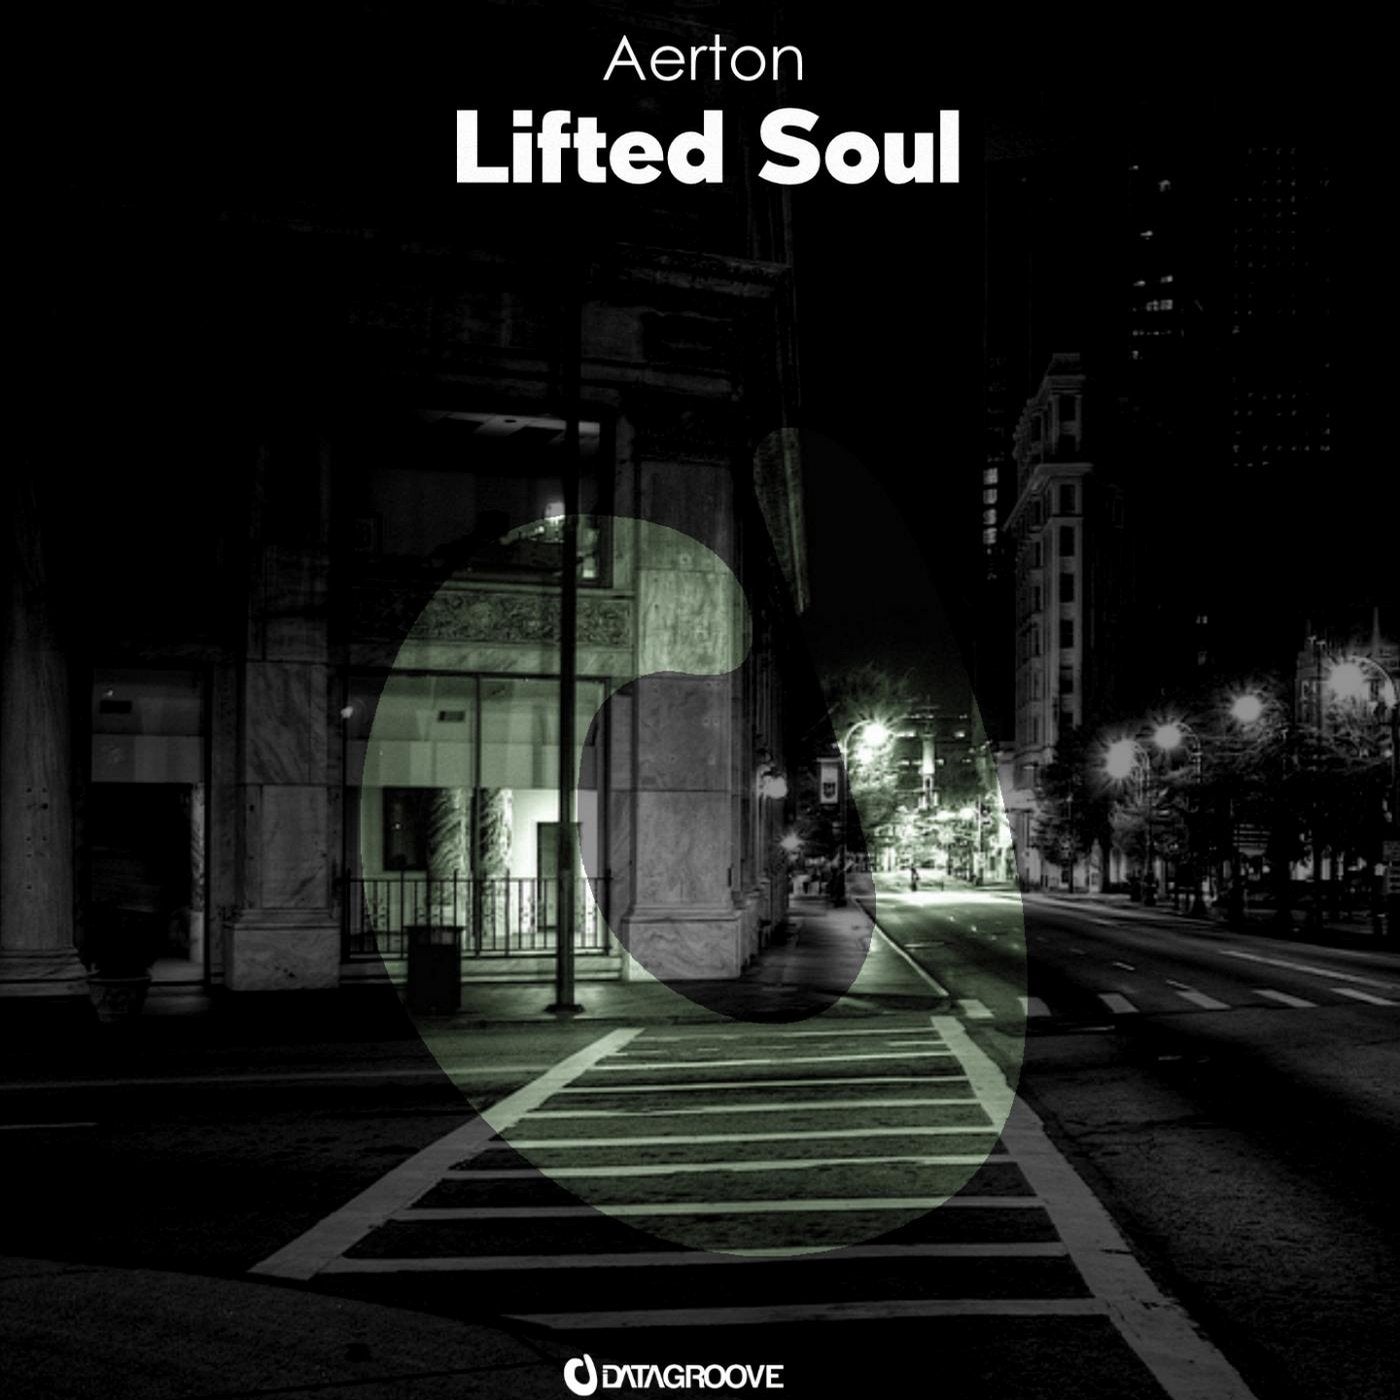 Lifted Soul